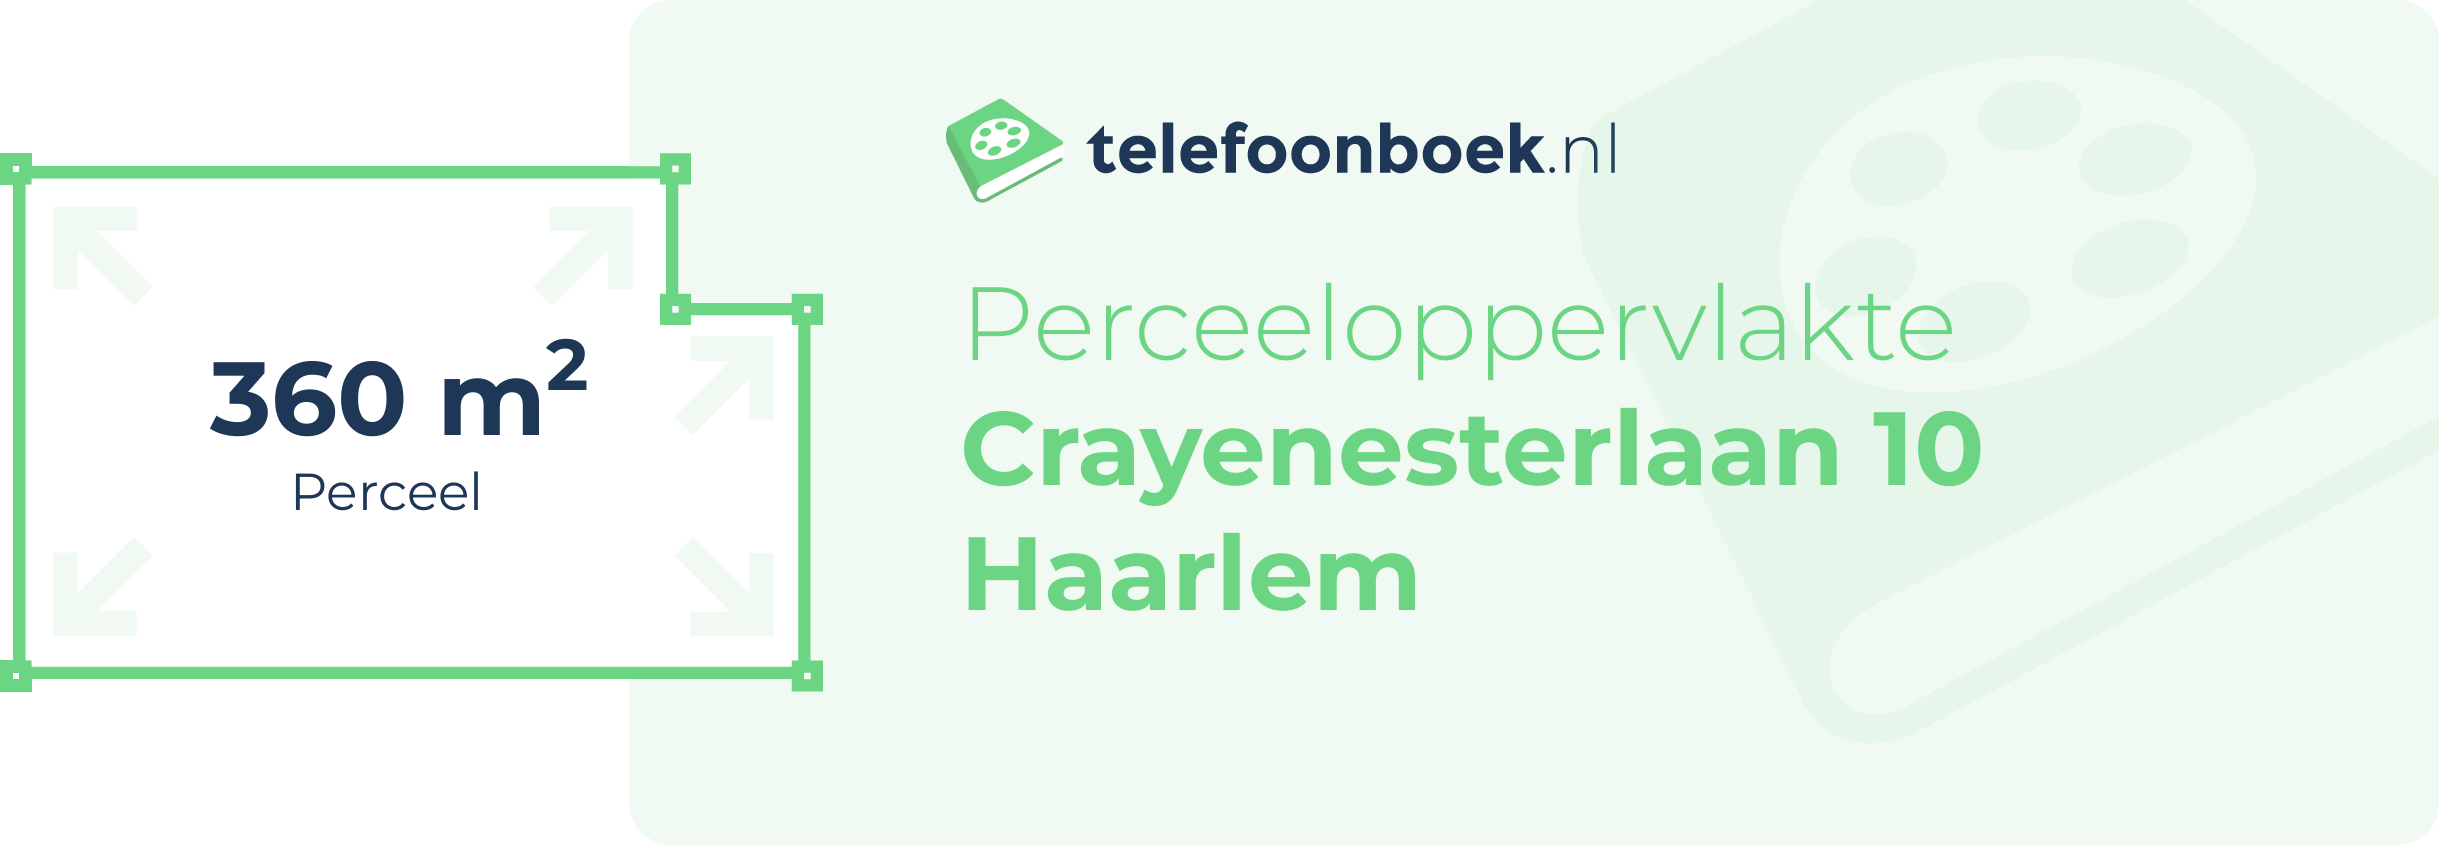 Perceeloppervlakte Crayenesterlaan 10 Haarlem